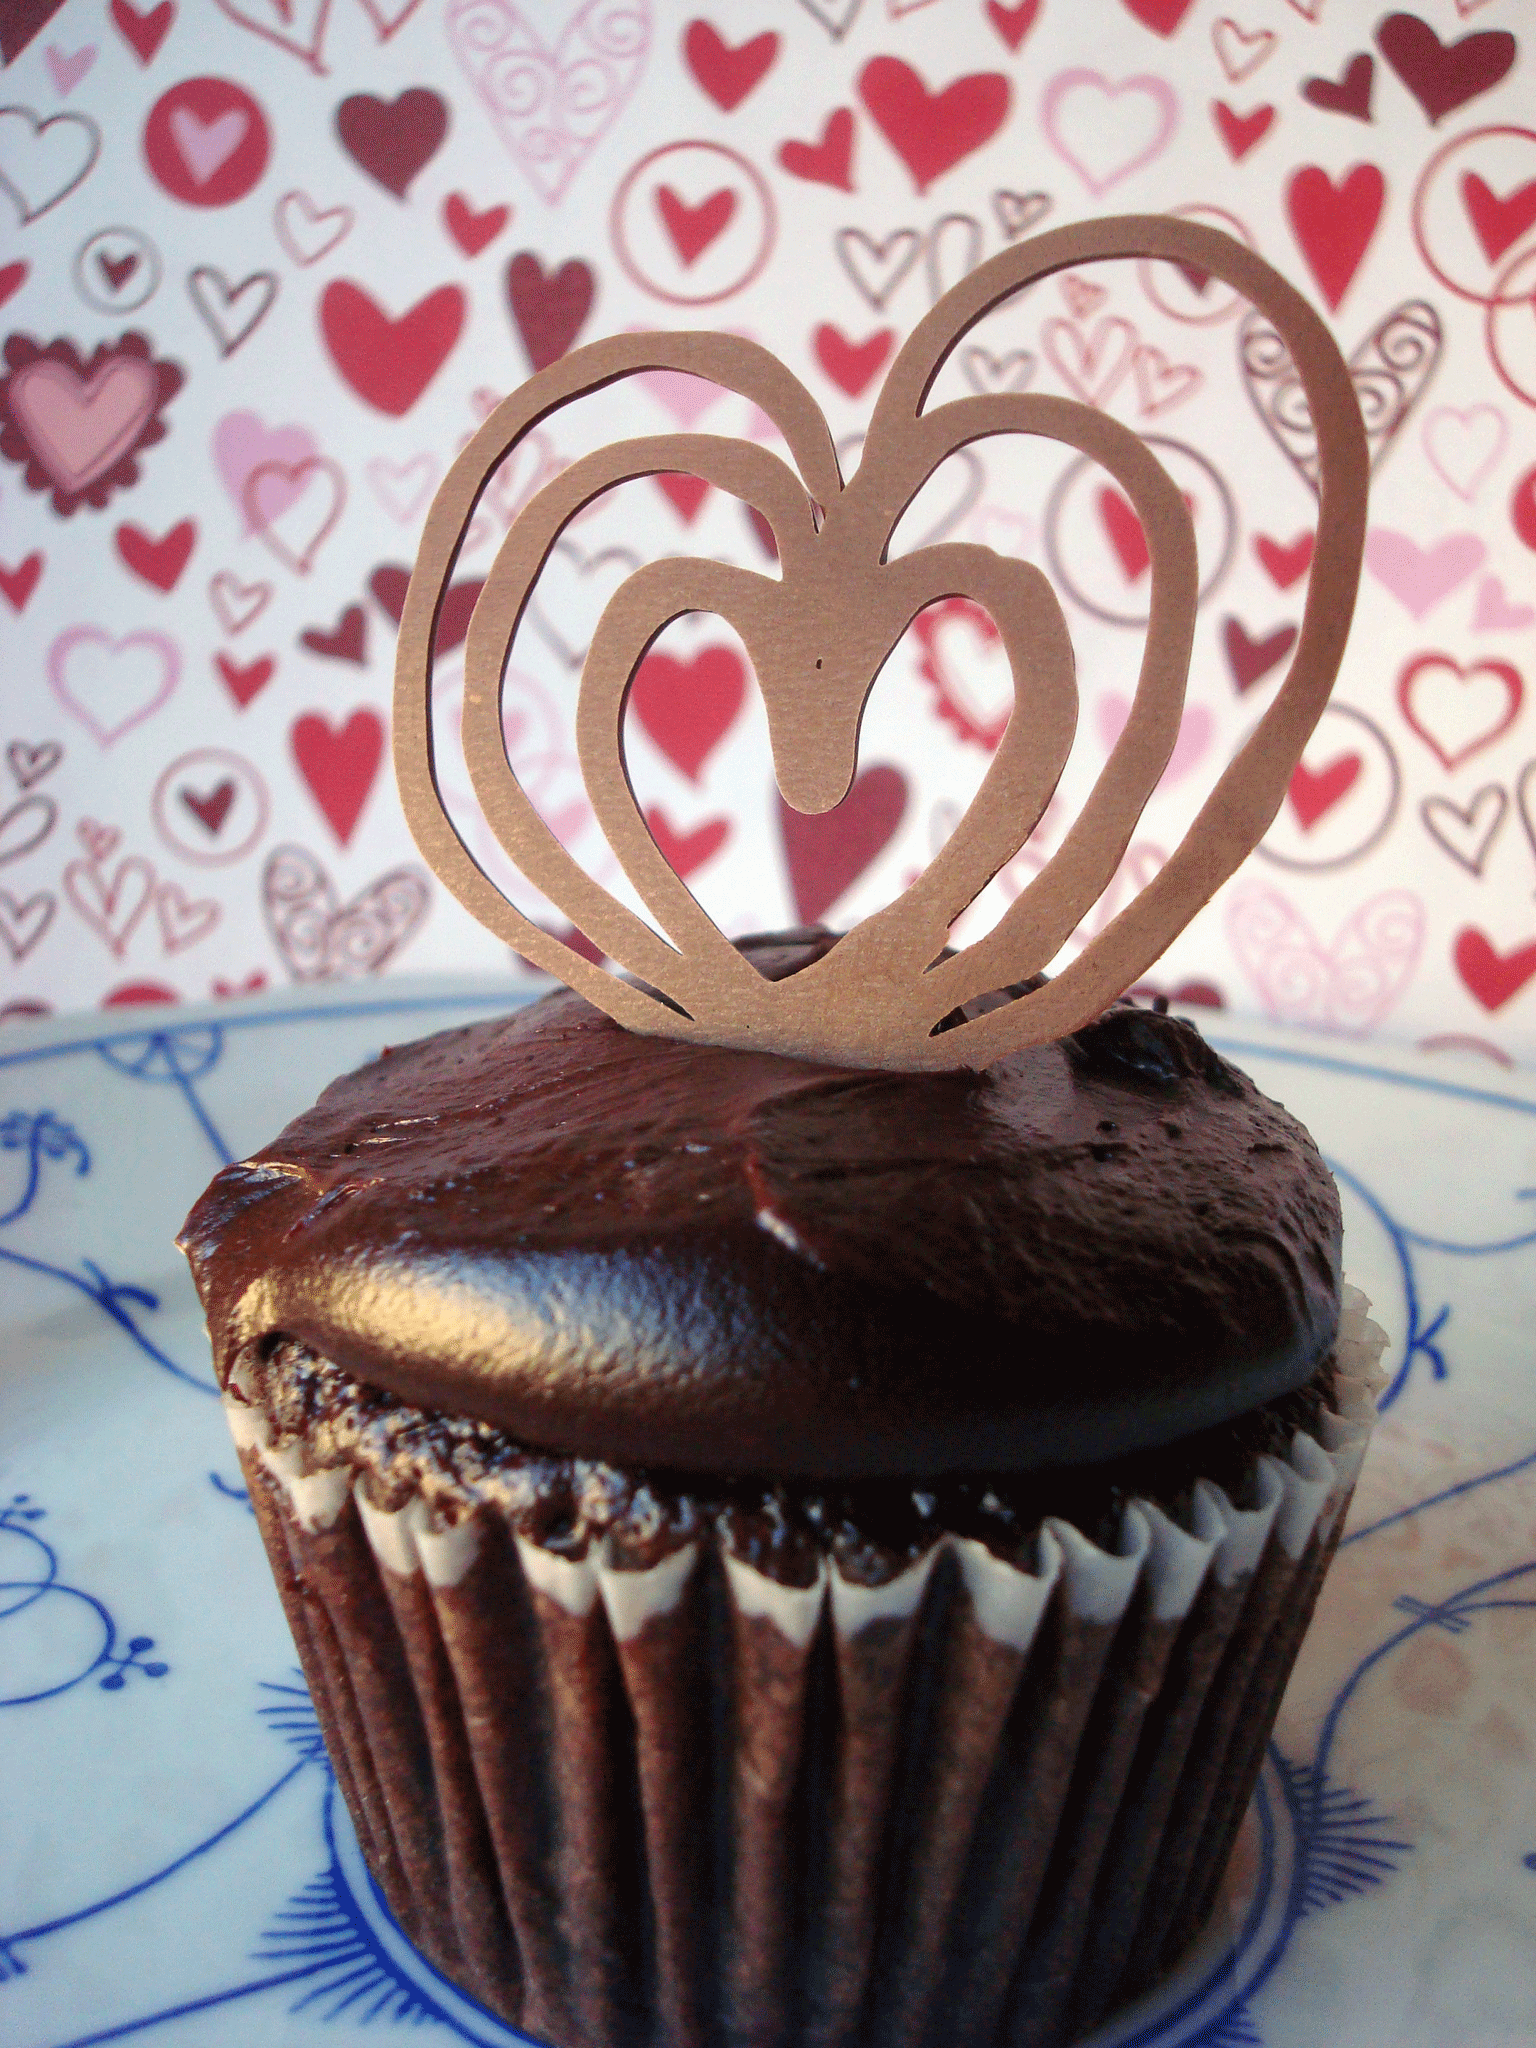 Chocolate Cupcake with Pipe Chocolate Heart Shaped Garnish